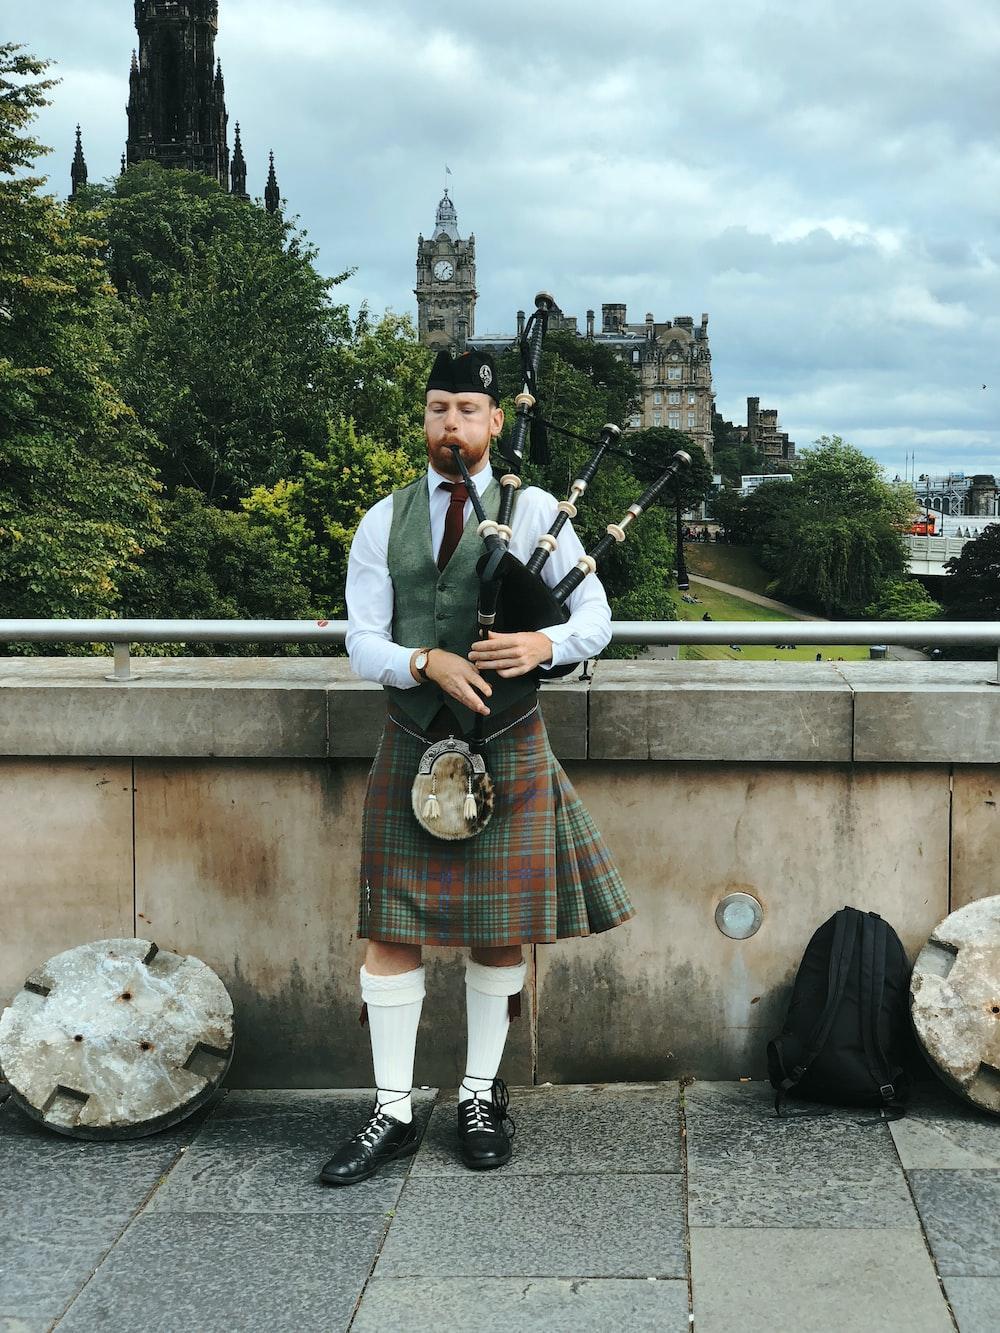 Fashion or Tradition? Are Kilts Scottish or Irish